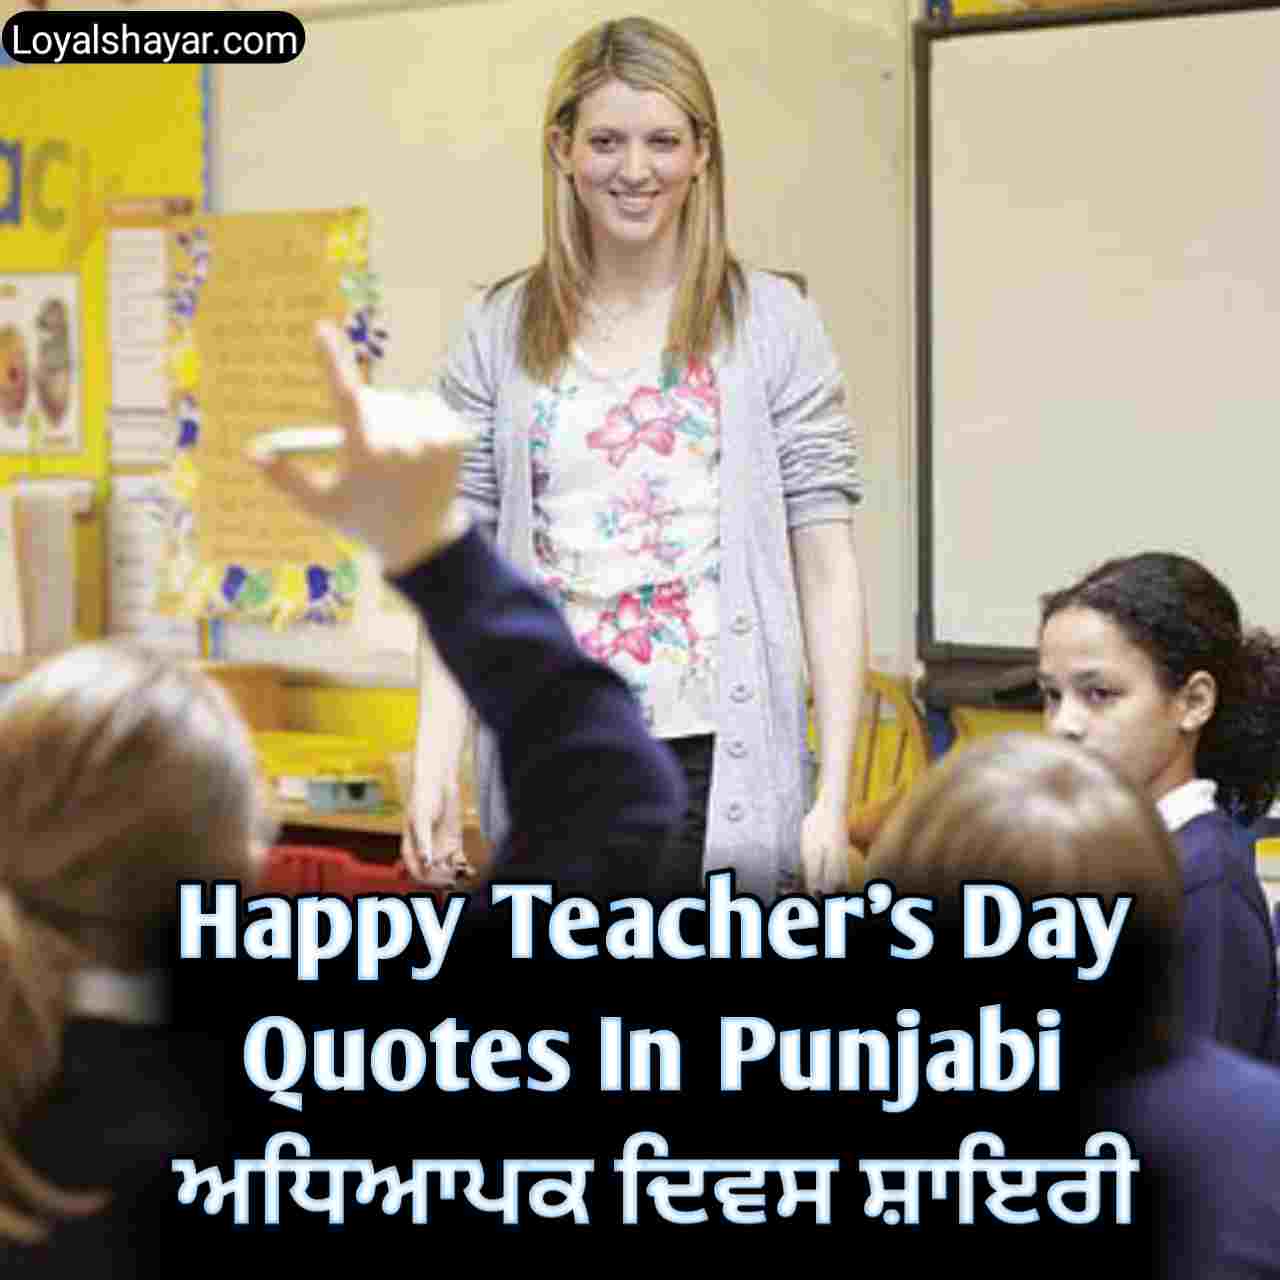 Happy Teachers Day Quotes In Punjabi _ ਅਧਿਆਪਕ ਦਿਵਸ ਸ਼ਾਇਰੀ